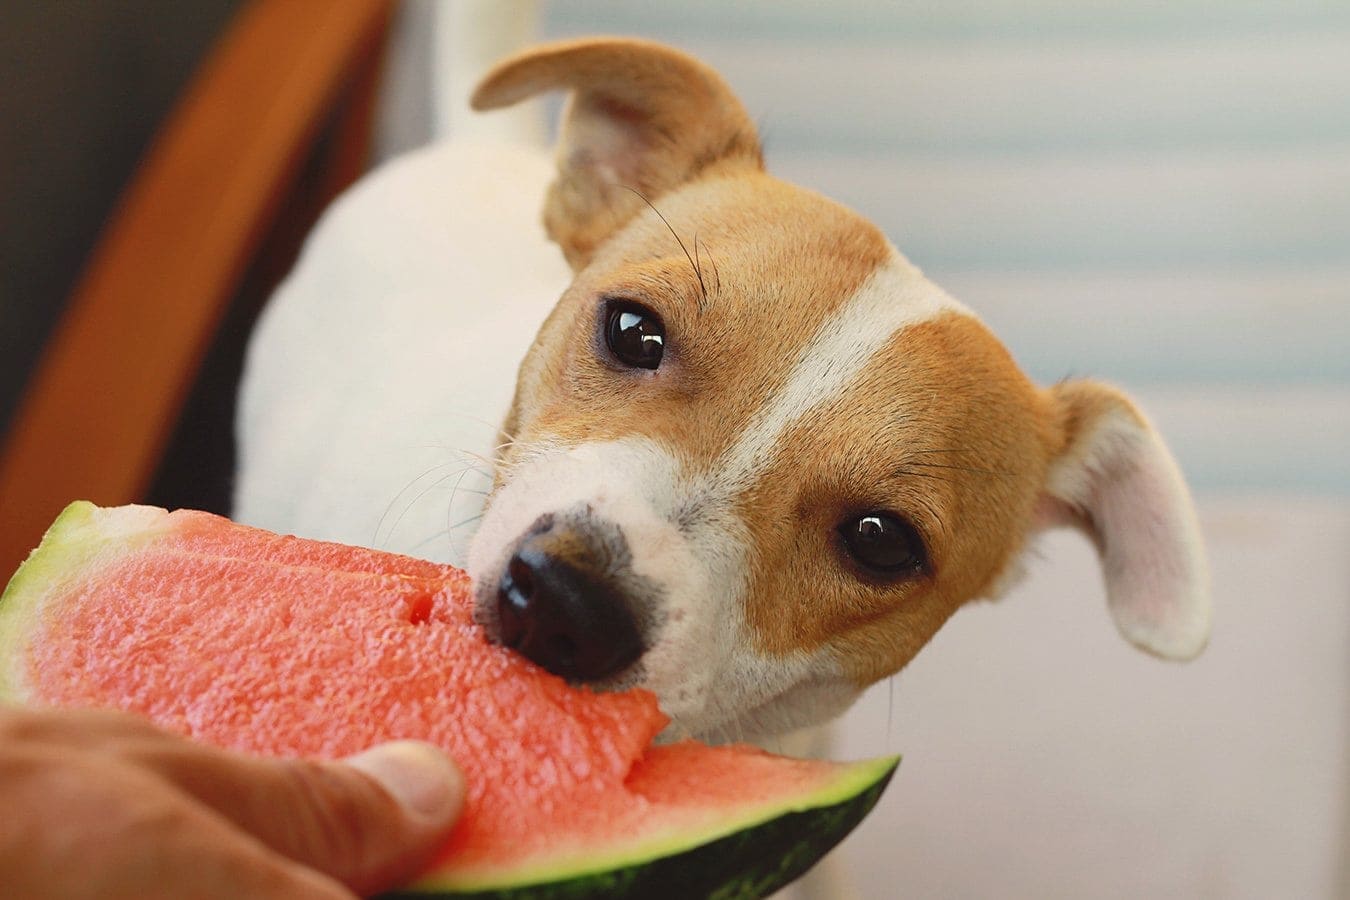 Jack Russell Terrier eating watermelon